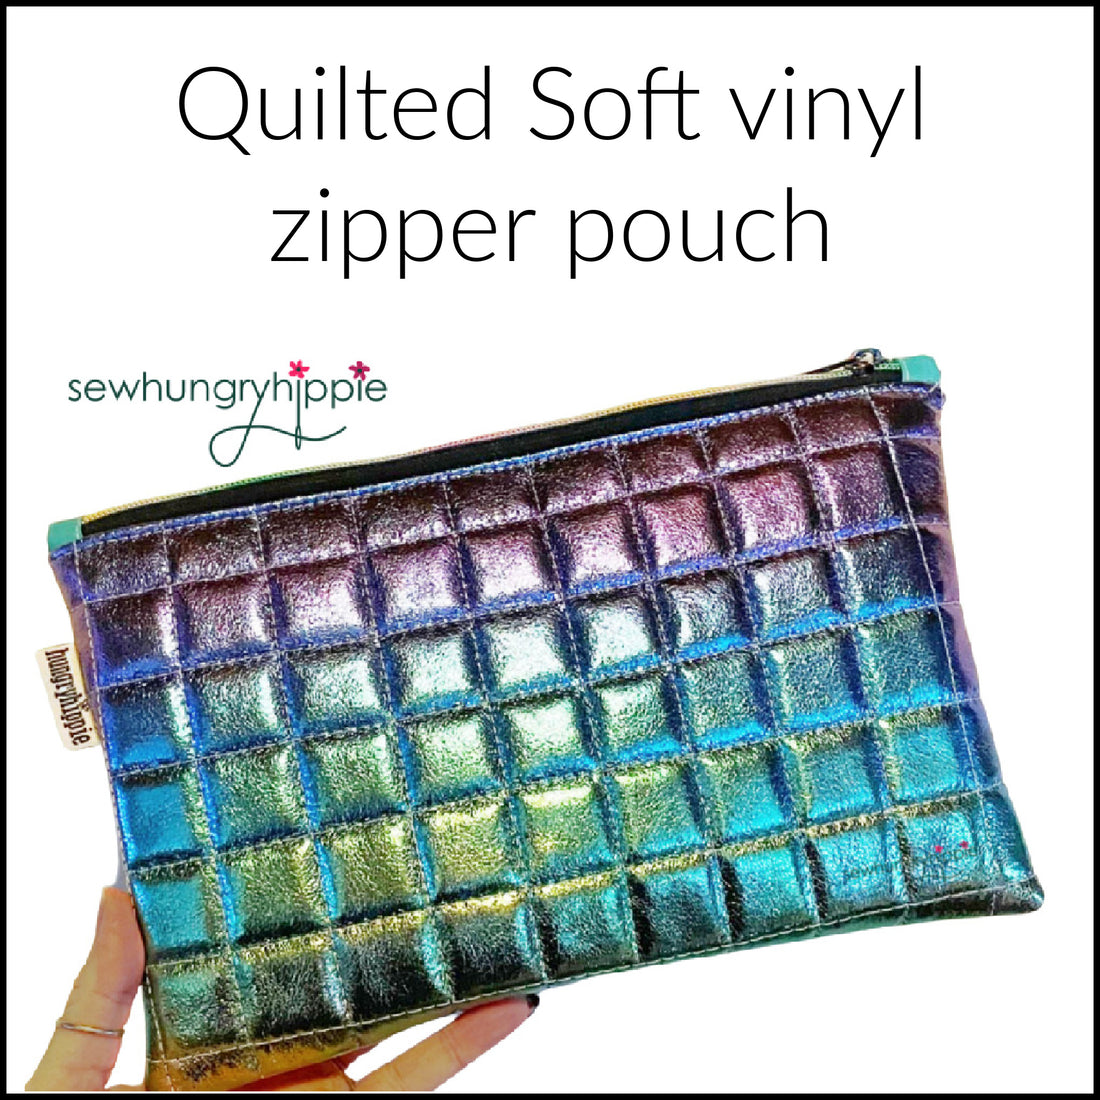 Quilted Soft Vinyl Zipper Pouch tutorial